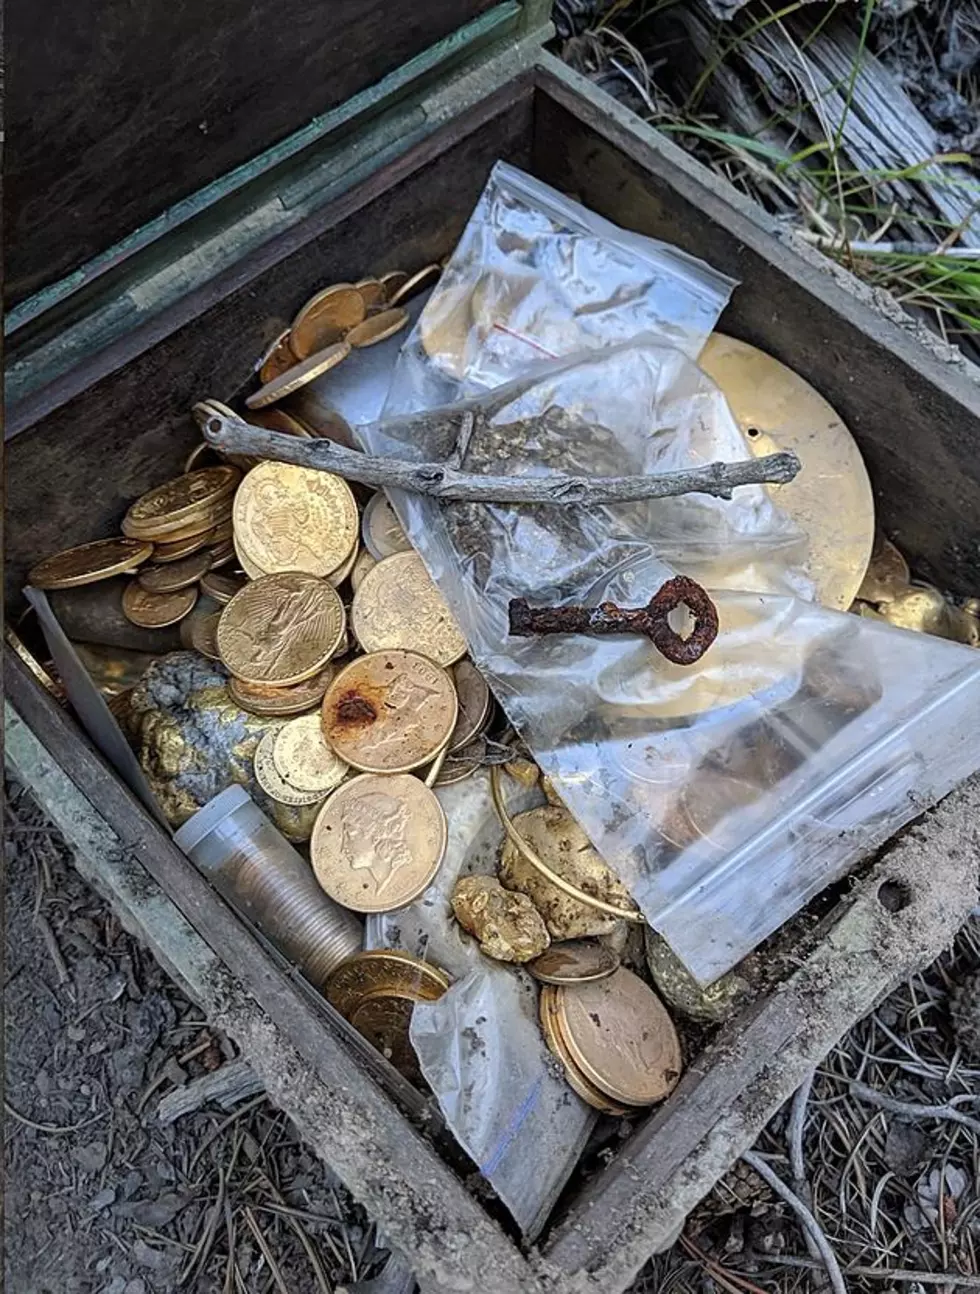 Confirmed: Forrest Fenn Treasure WAS Found in Wyoming